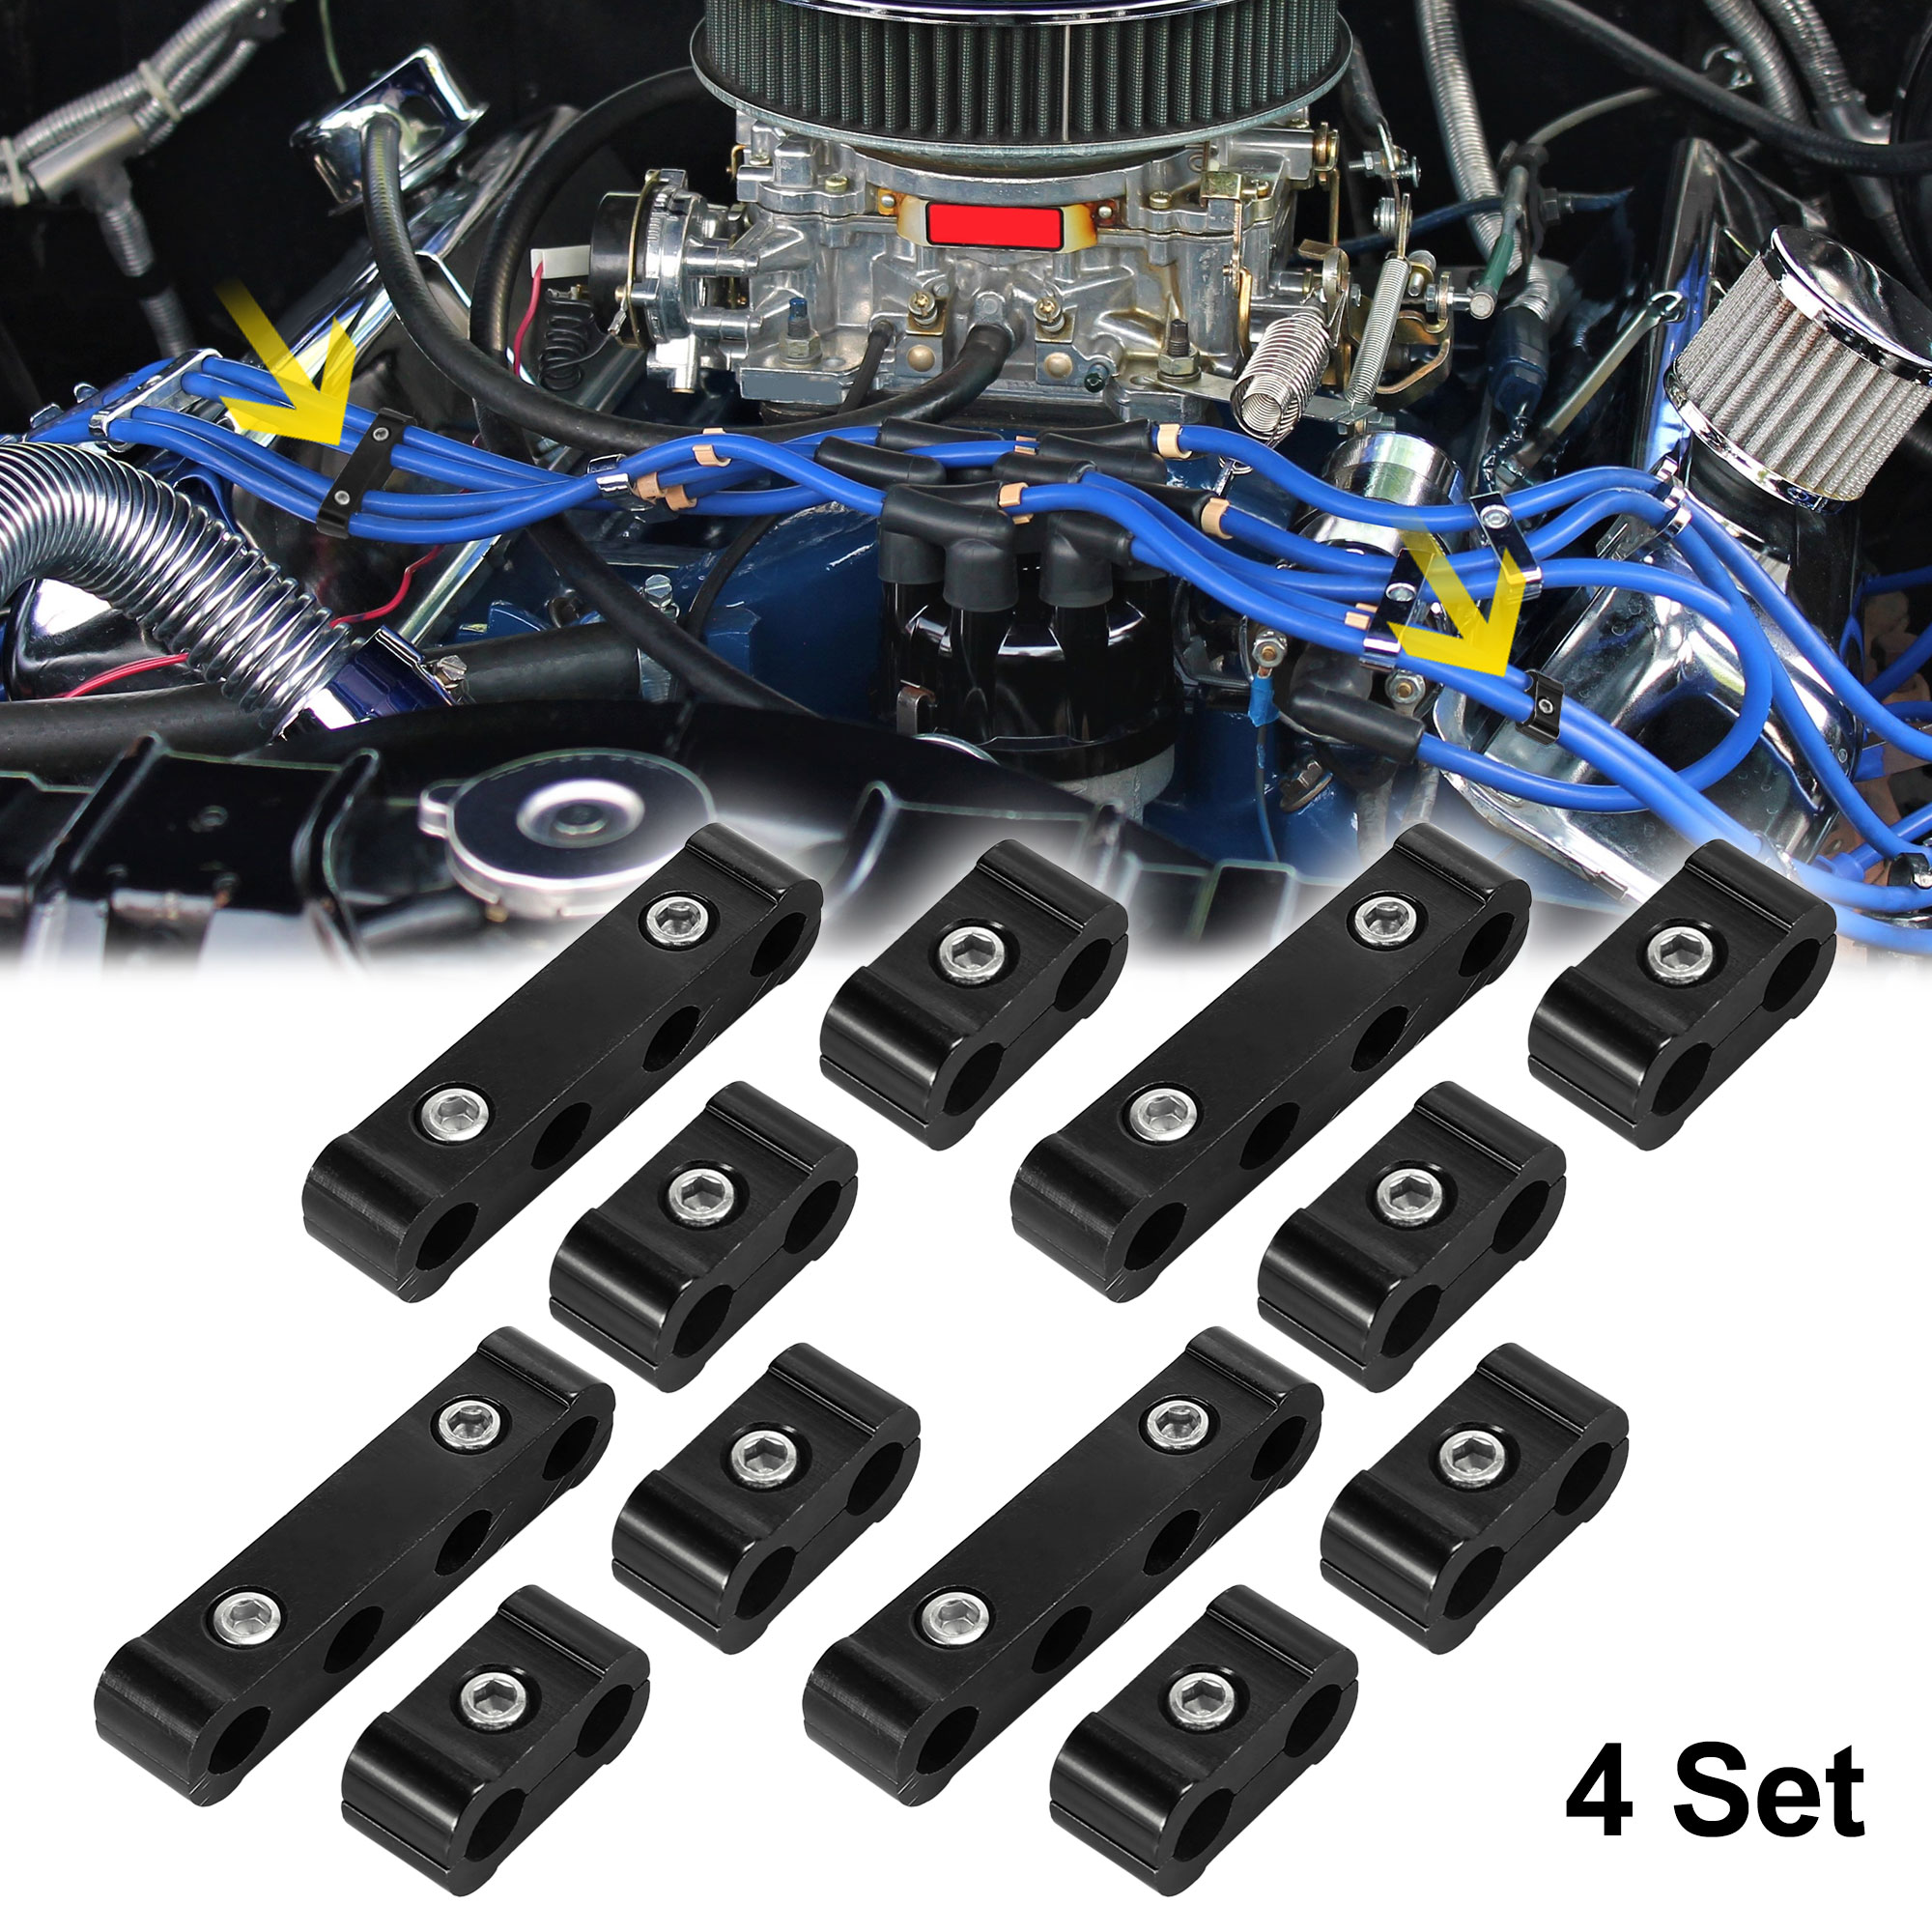 X AUTOHAUX 2 Set 8mm Car Engine Spark Plug Wire Separator Looms Divider Organizer Clamp Aluminum Alloy Green 